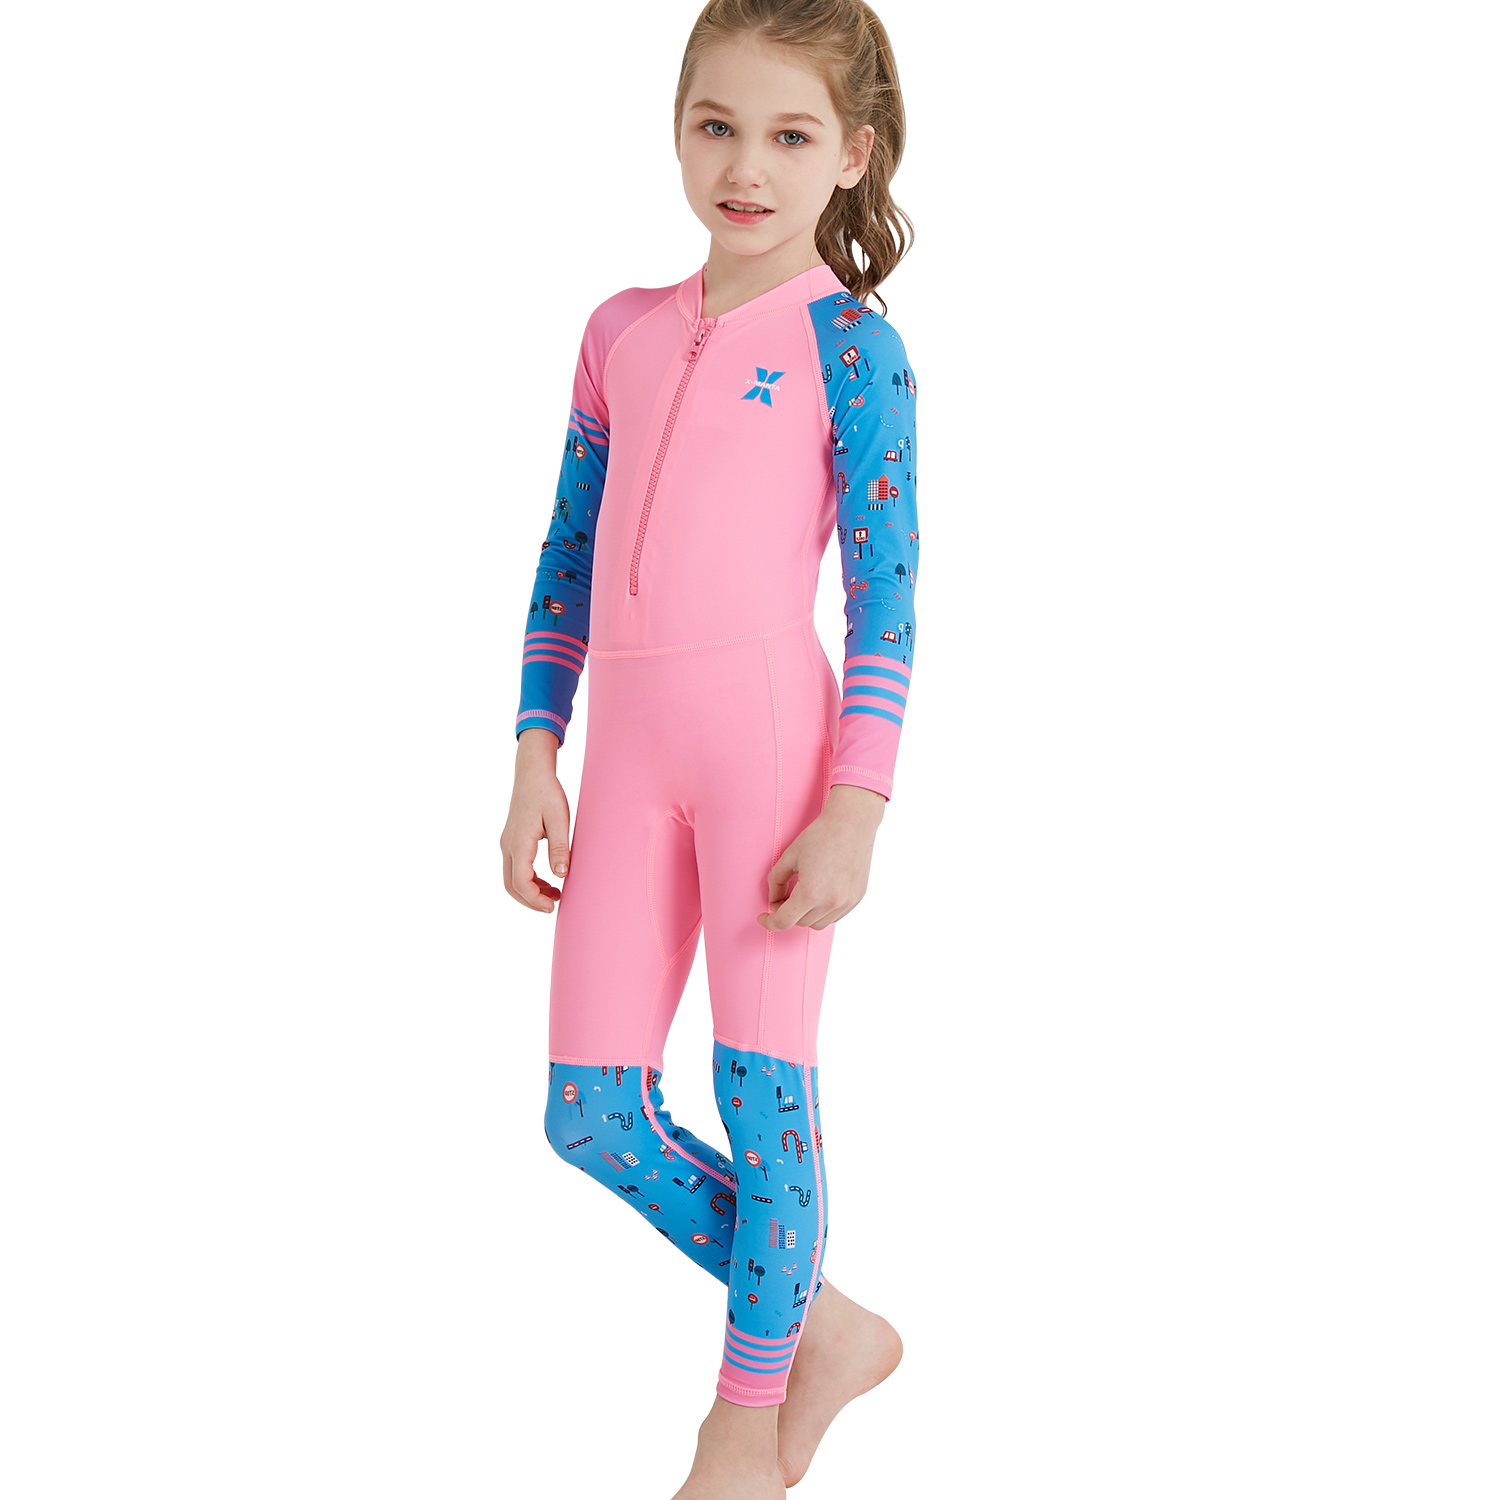 Irder - fashion zipper printing girl boy wet suit swimwear fast dry